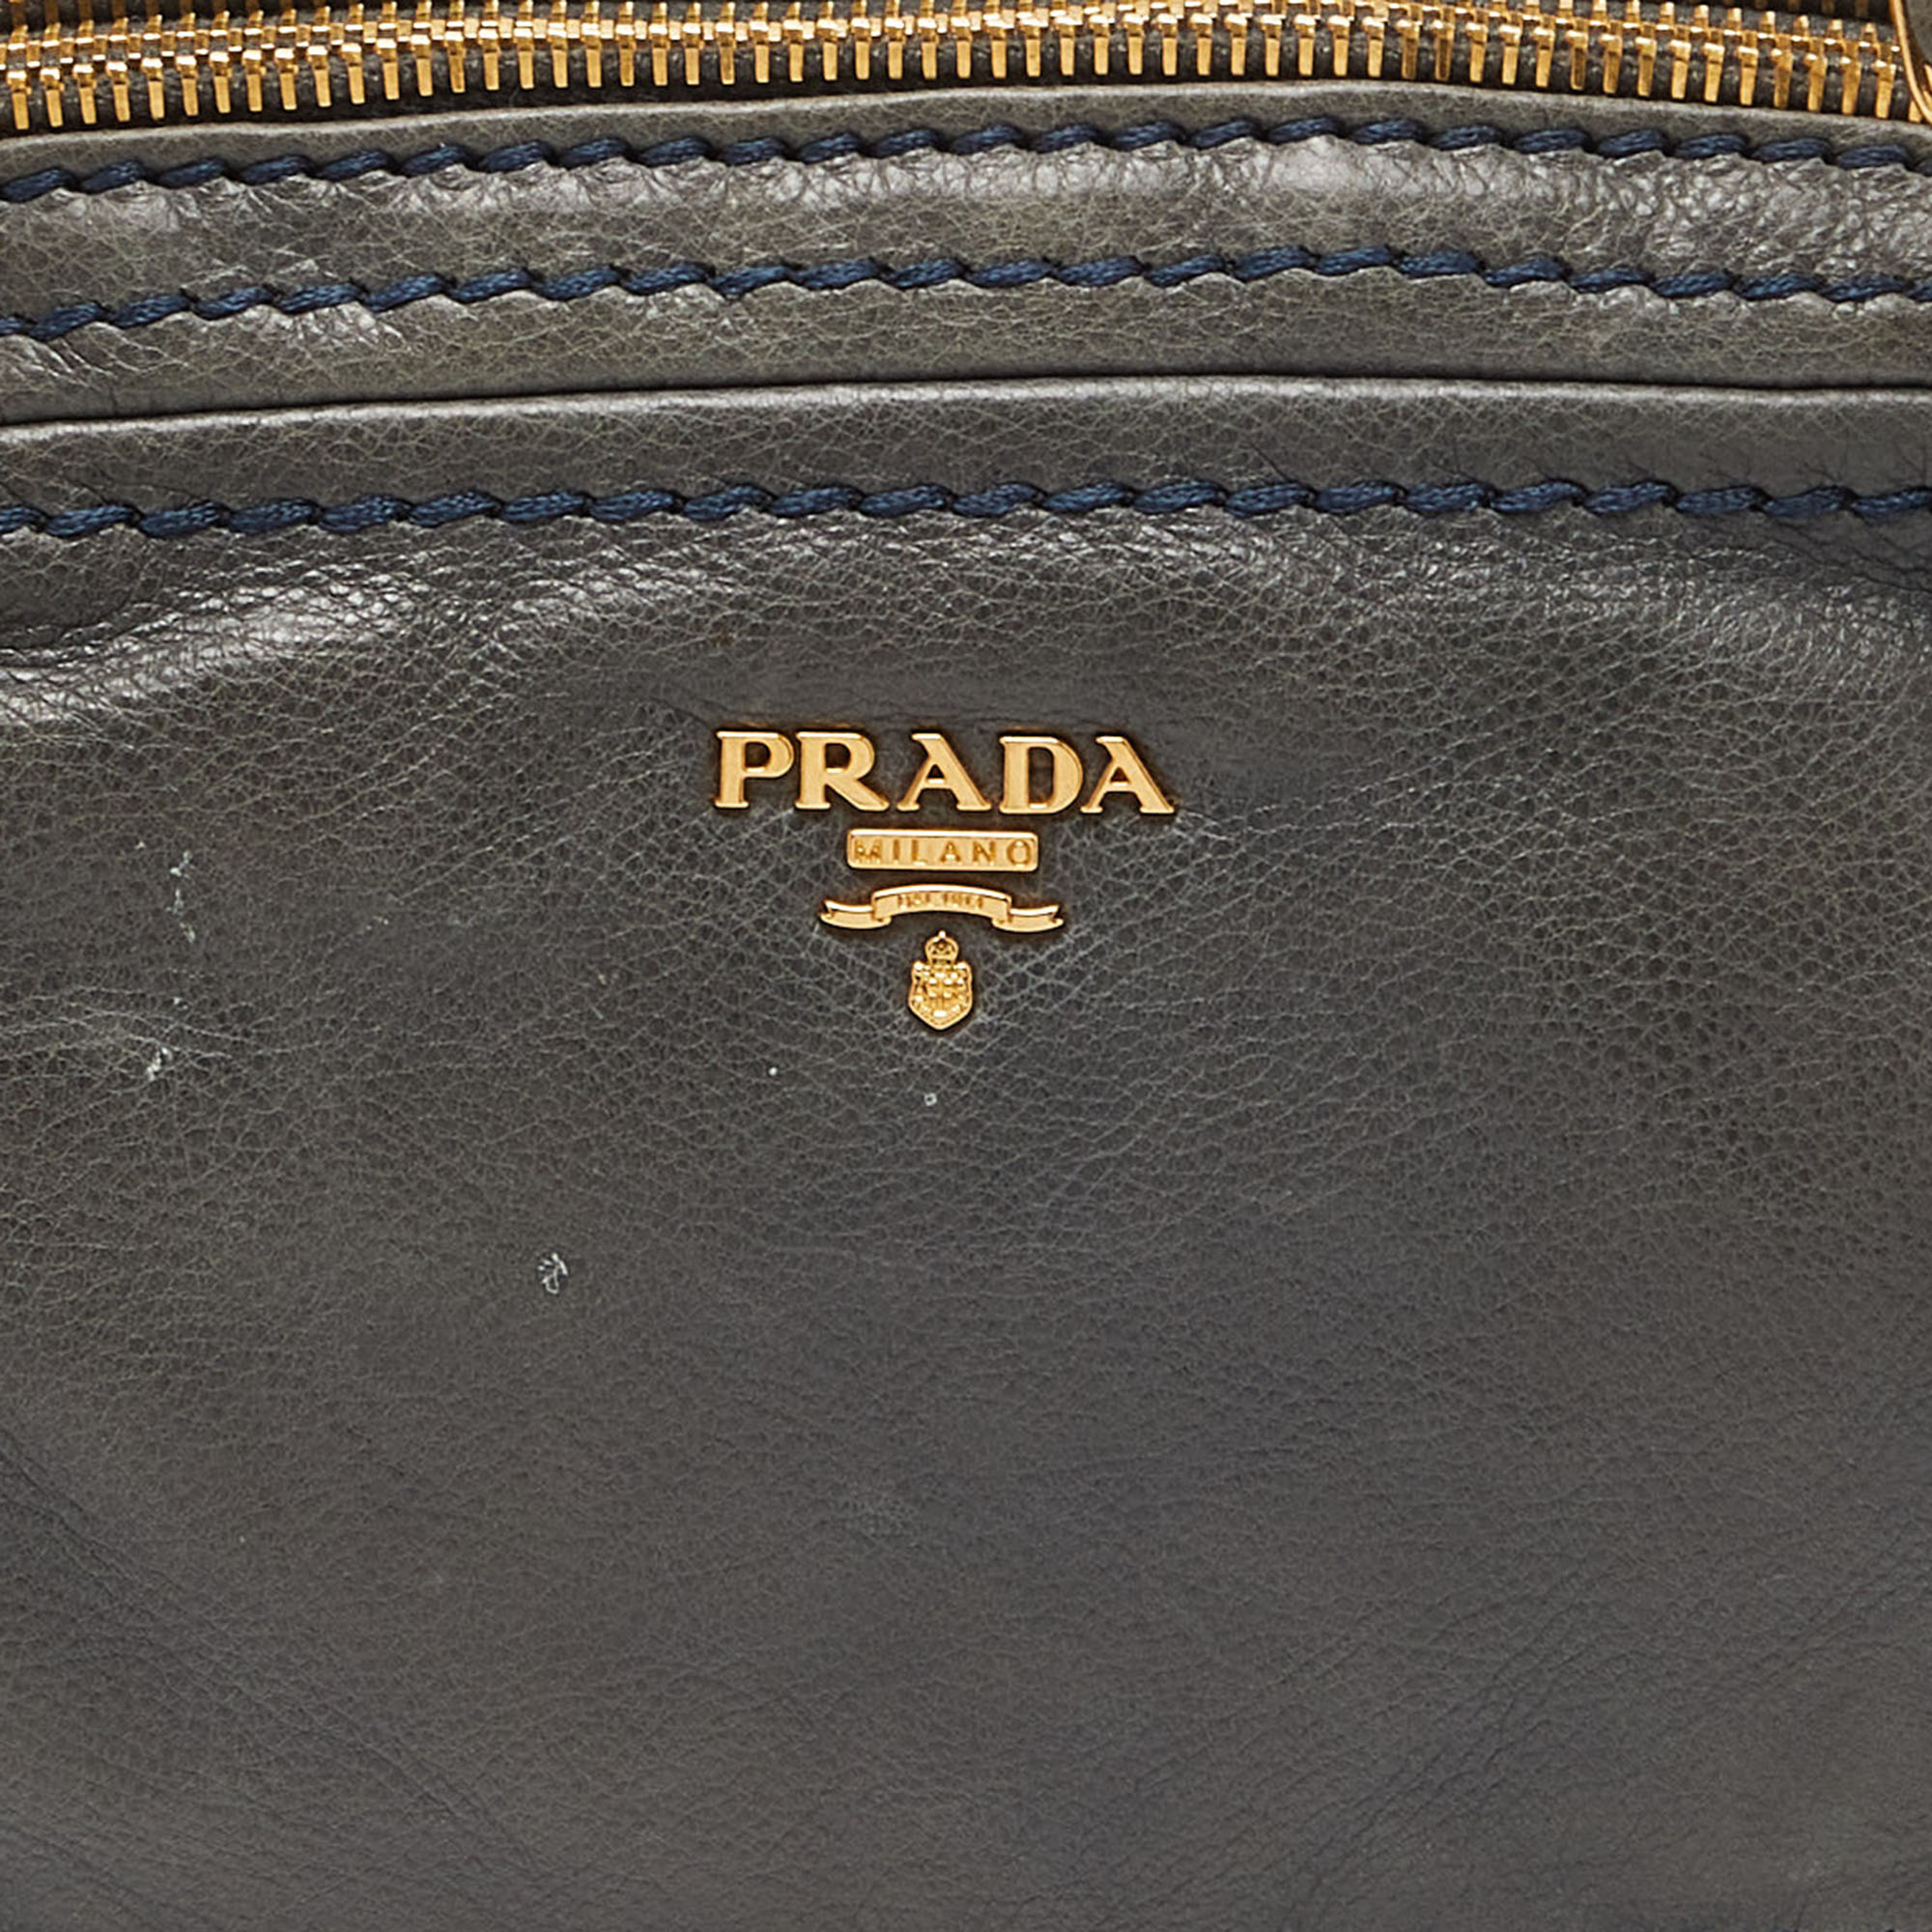 Prada Blue Leather Chain Shoulder Bag